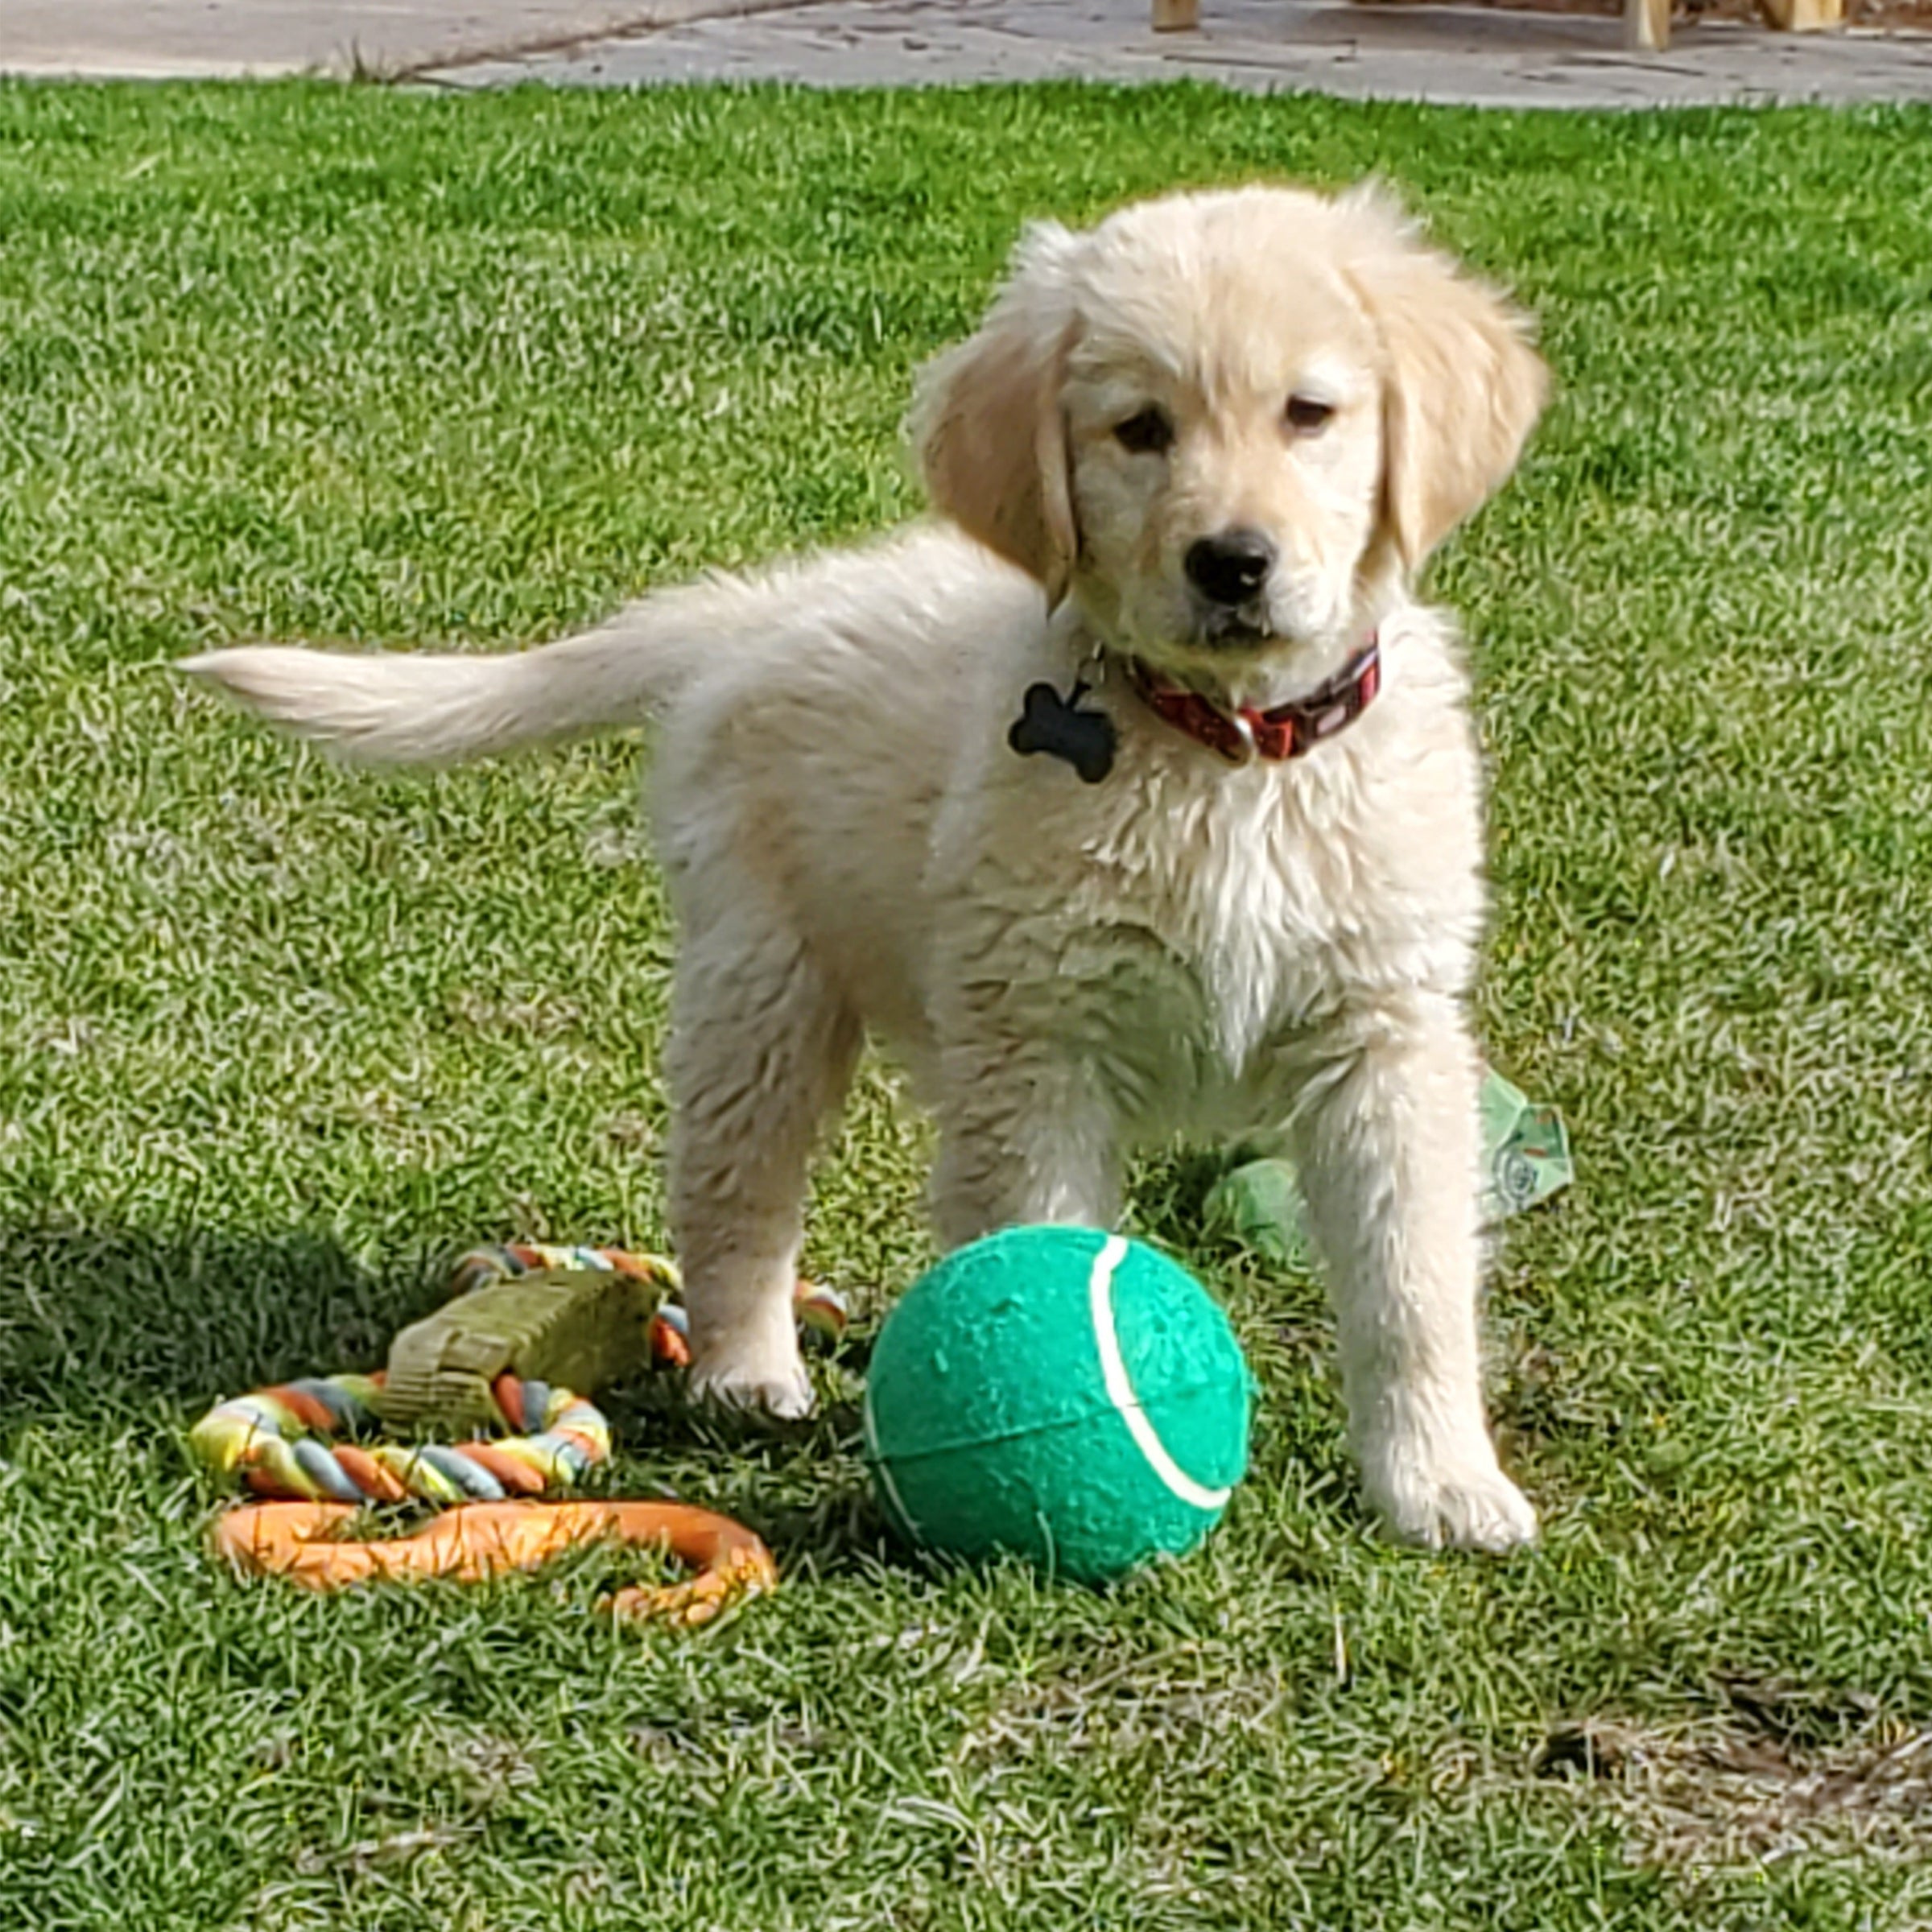 a golden retriever puppy with a green ball